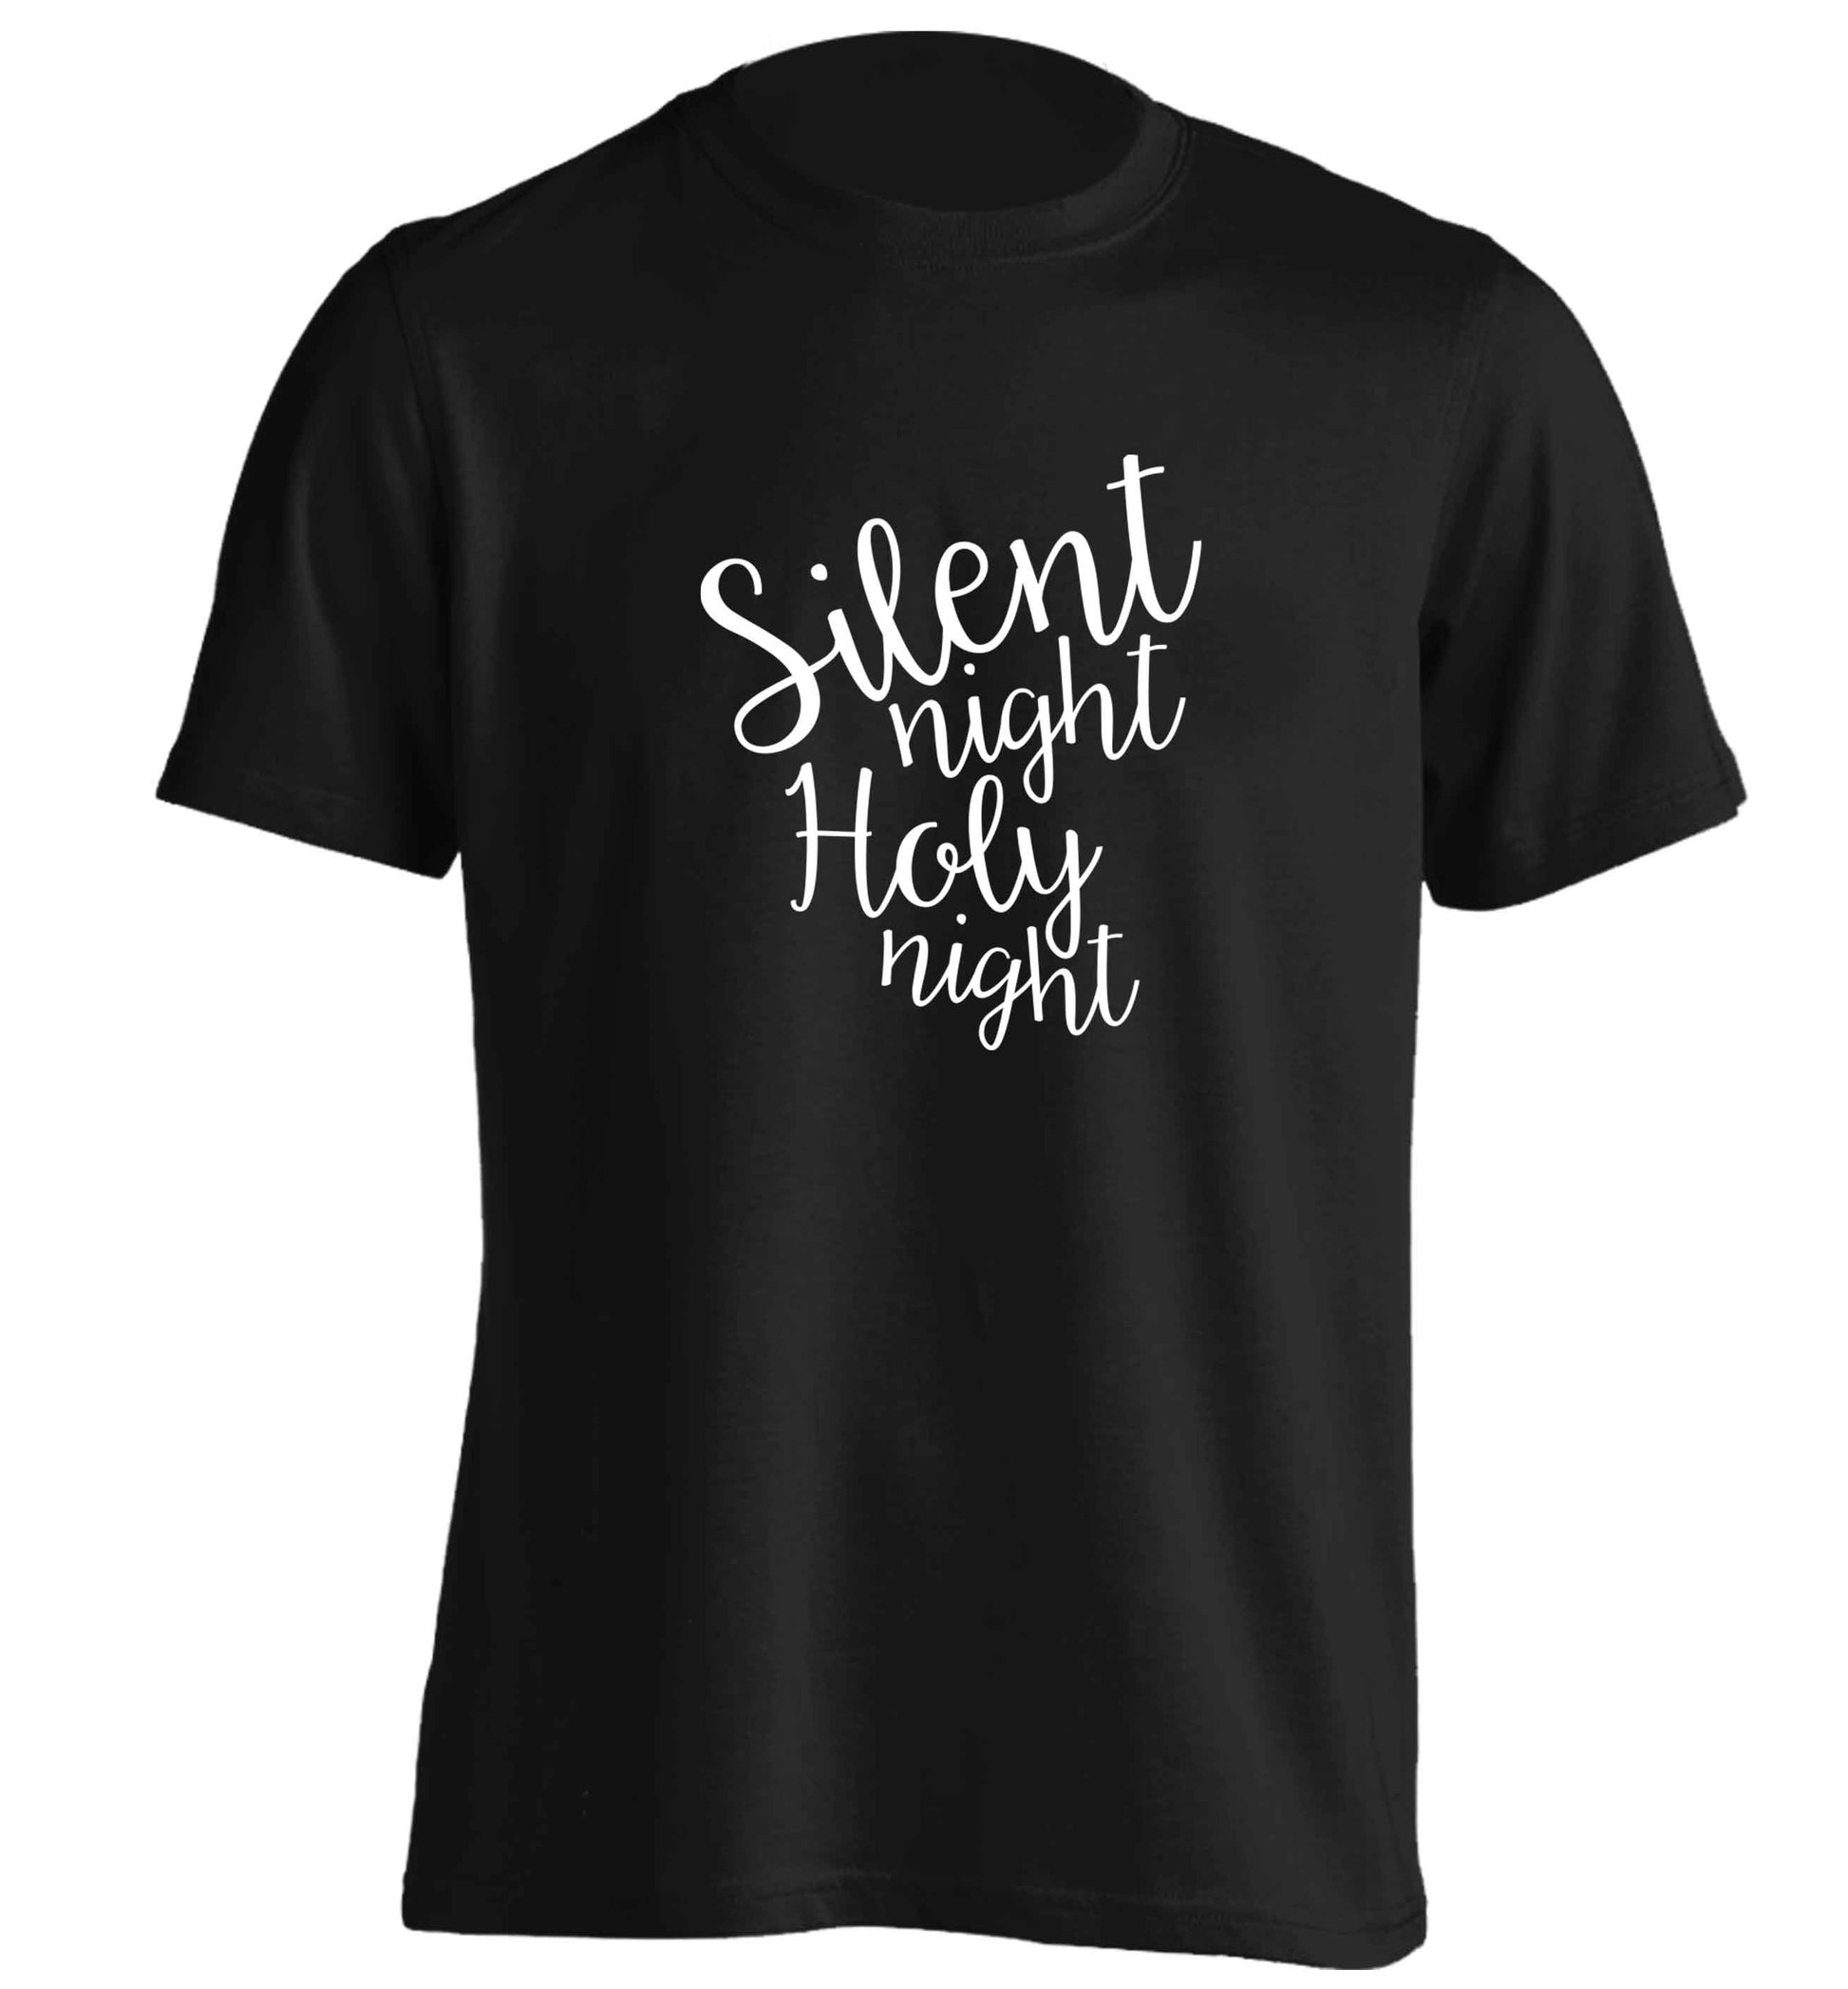 Silent night holy night adults unisex black Tshirt 2XL